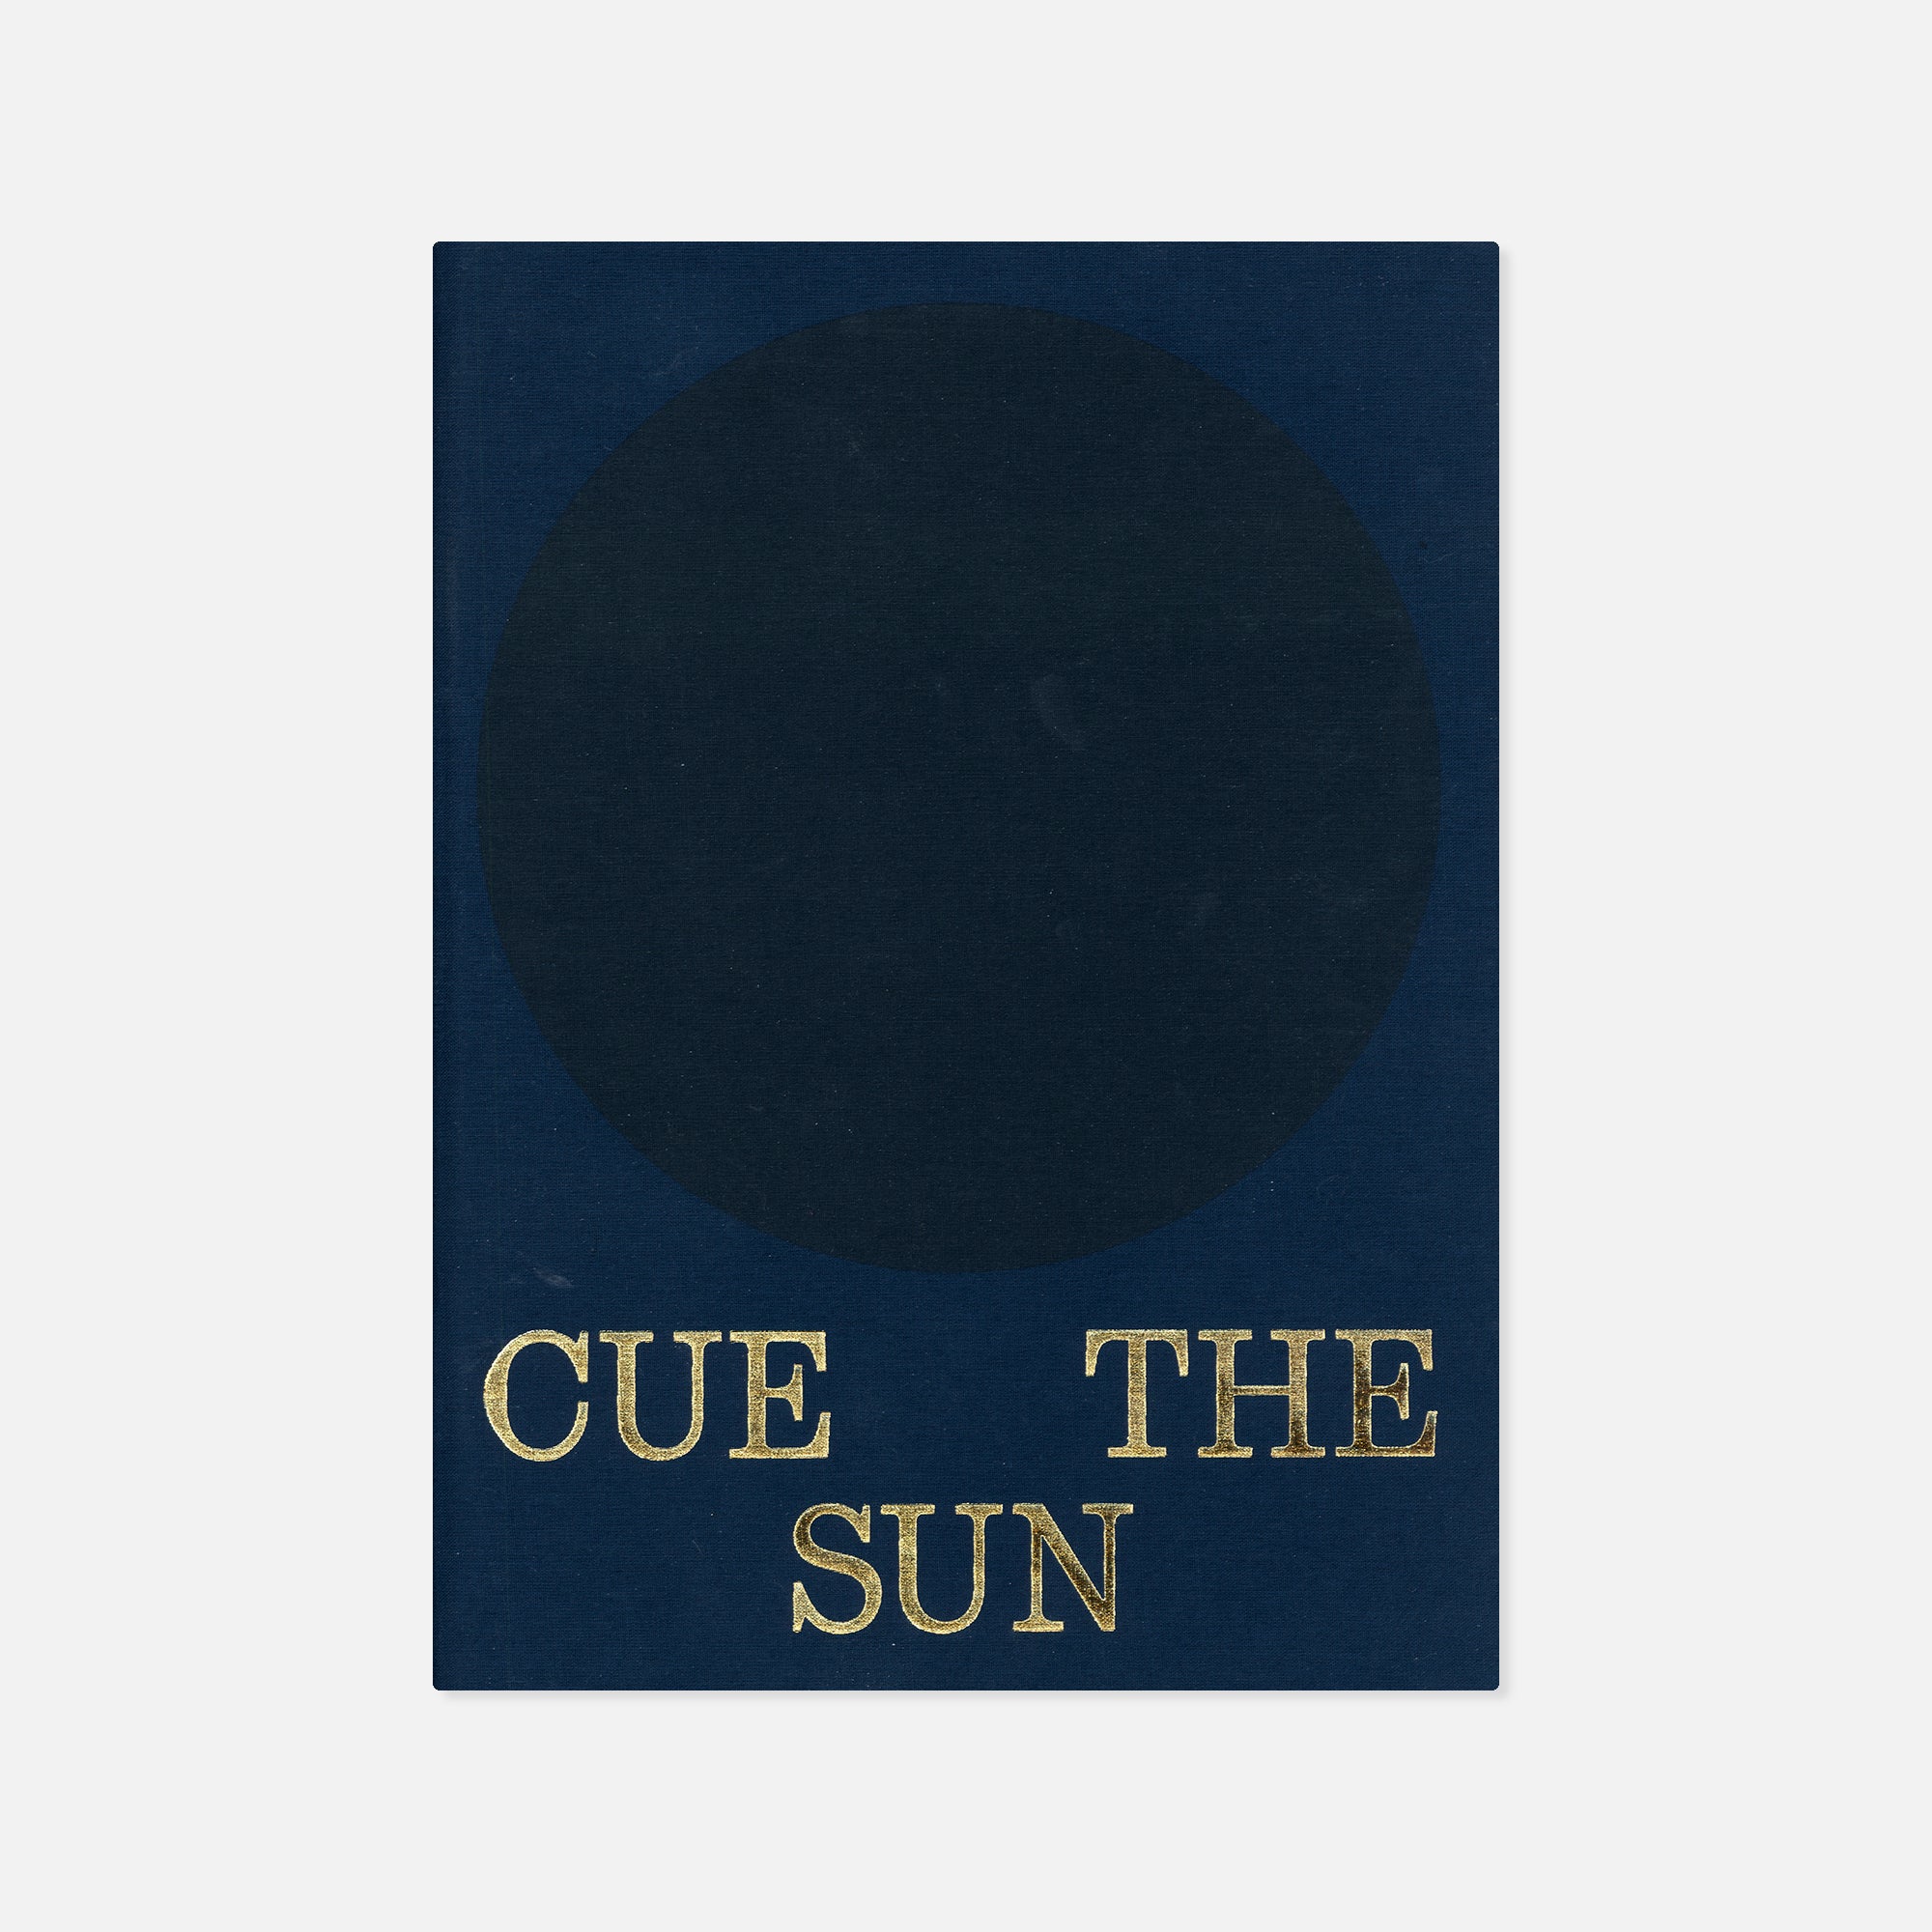 Trent Parke — Cue the Sun